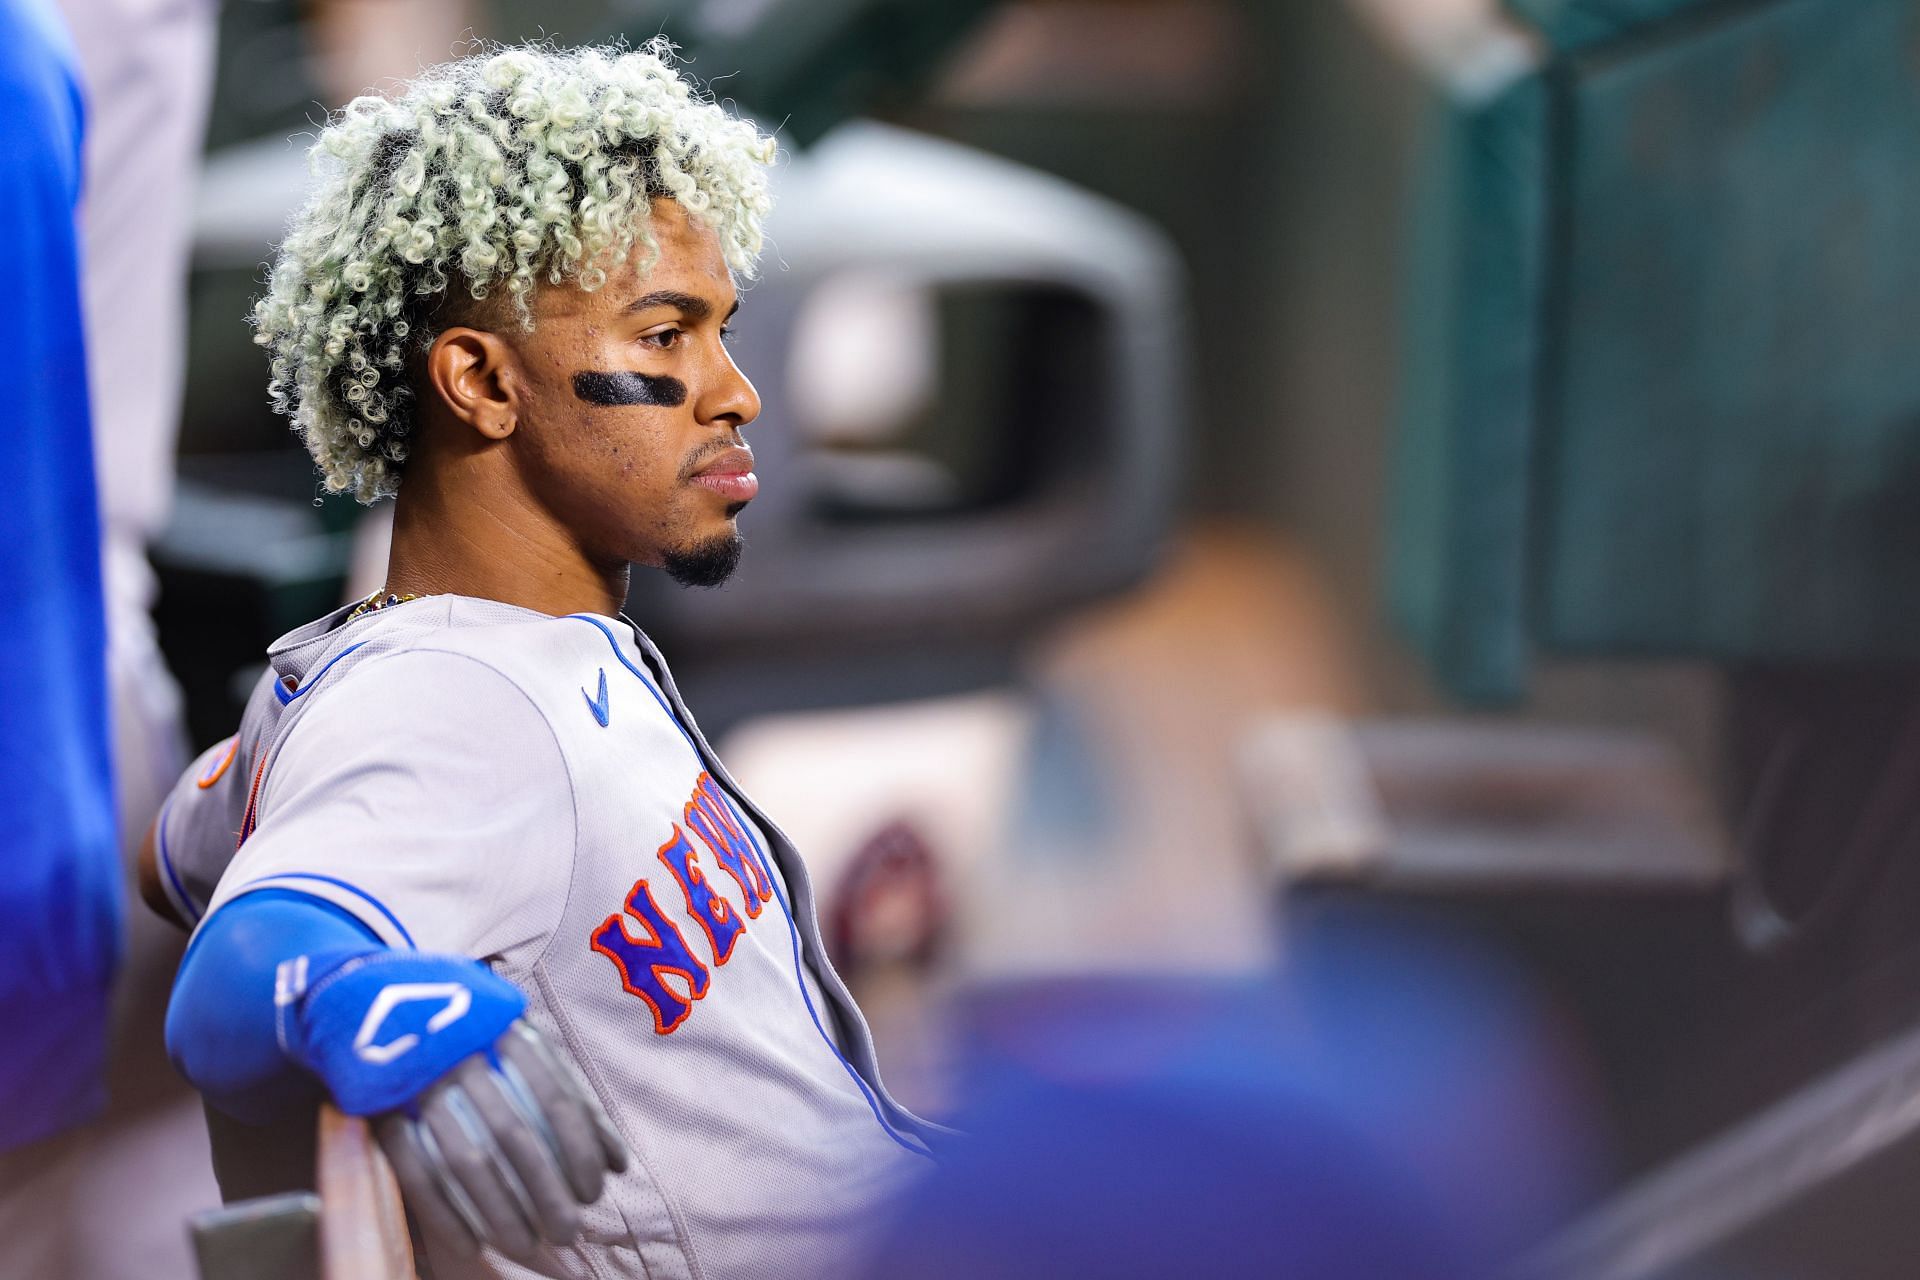 Puerto Rico breaks world record as baseball fans go blond, Sports